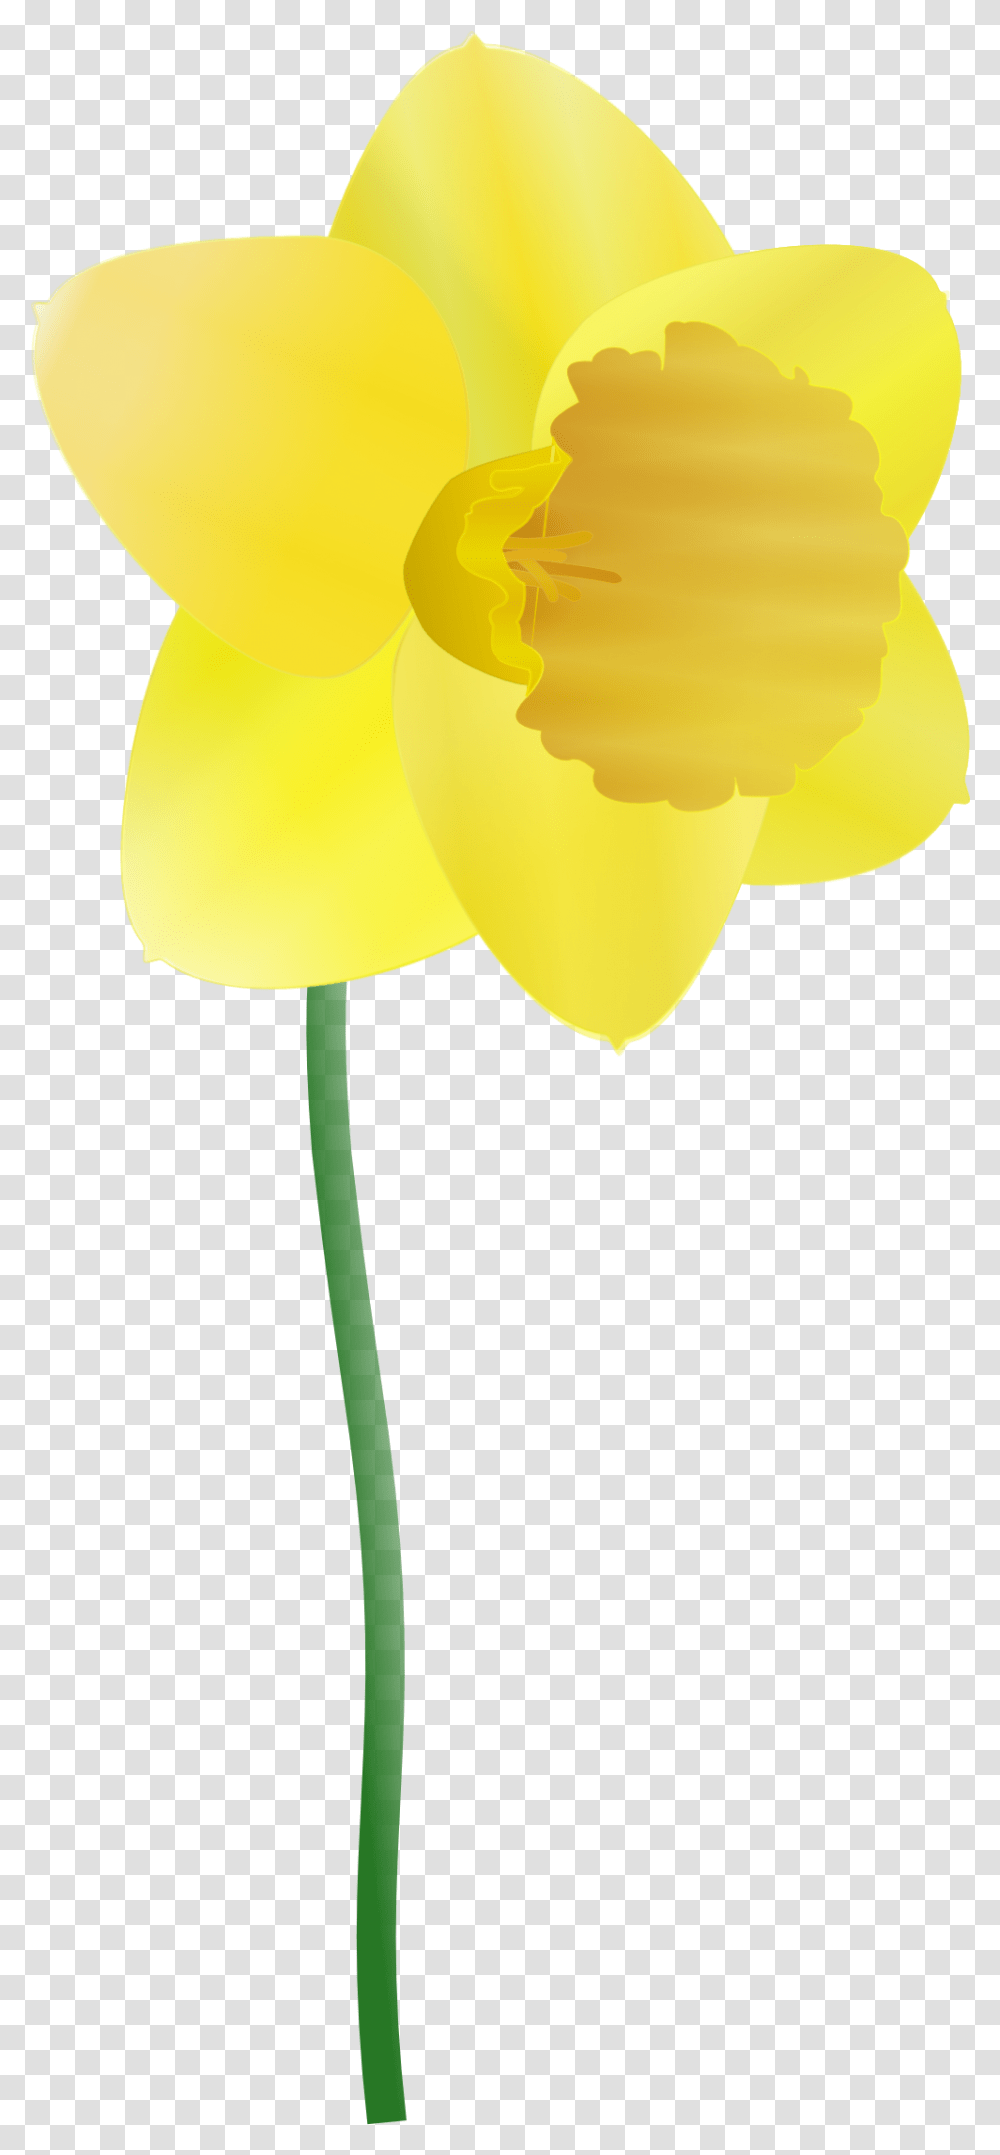 Daffodil Clip Arts For Web Cartoon Daffodils, Plant, Flower, Blossom, Petal Transparent Png